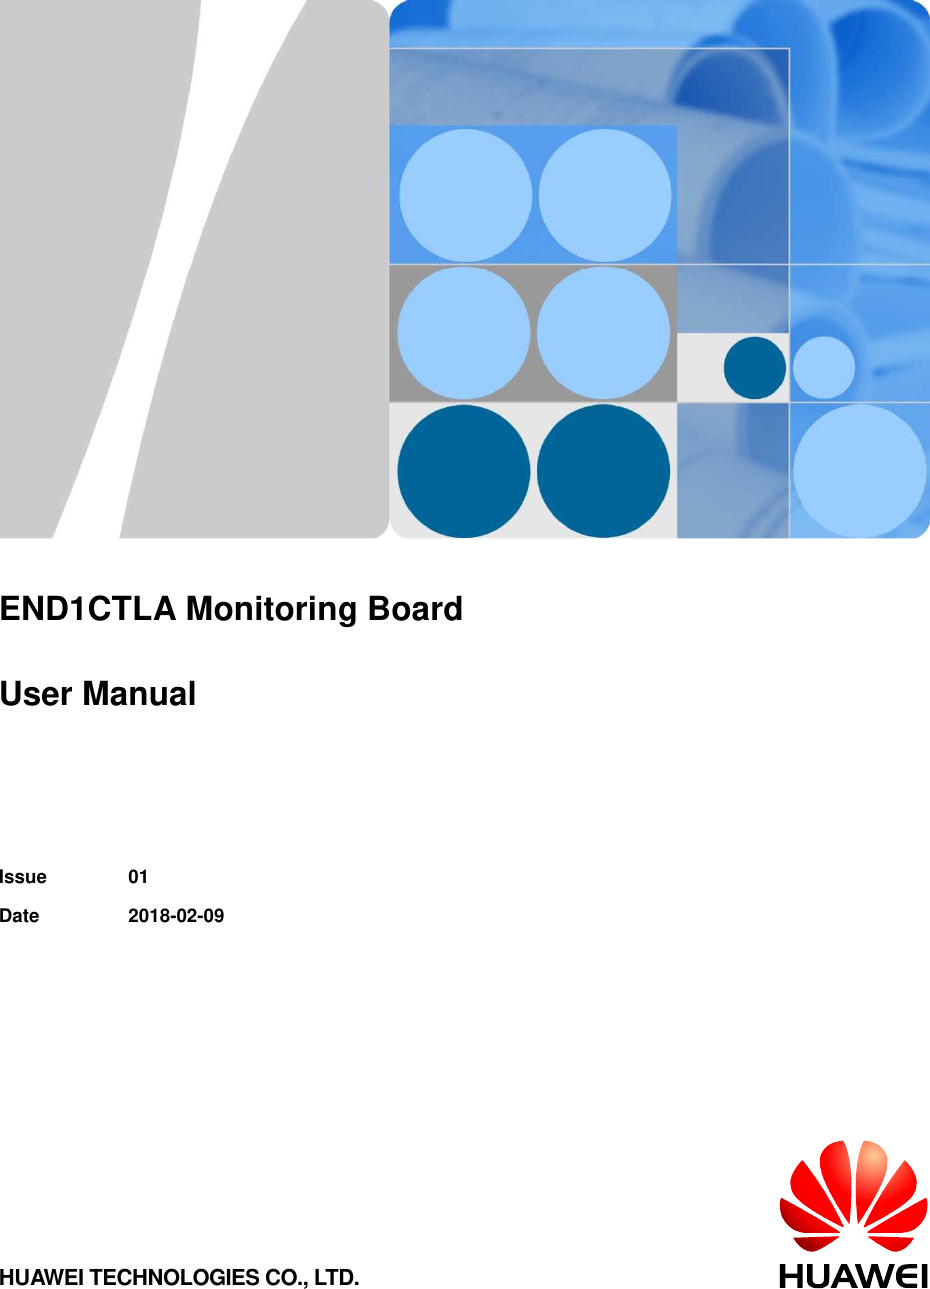       END1CTLA Monitoring Board  User Manual  Issue 01 Date 2018-02-09 HUAWEI TECHNOLOGIES CO., LTD. 